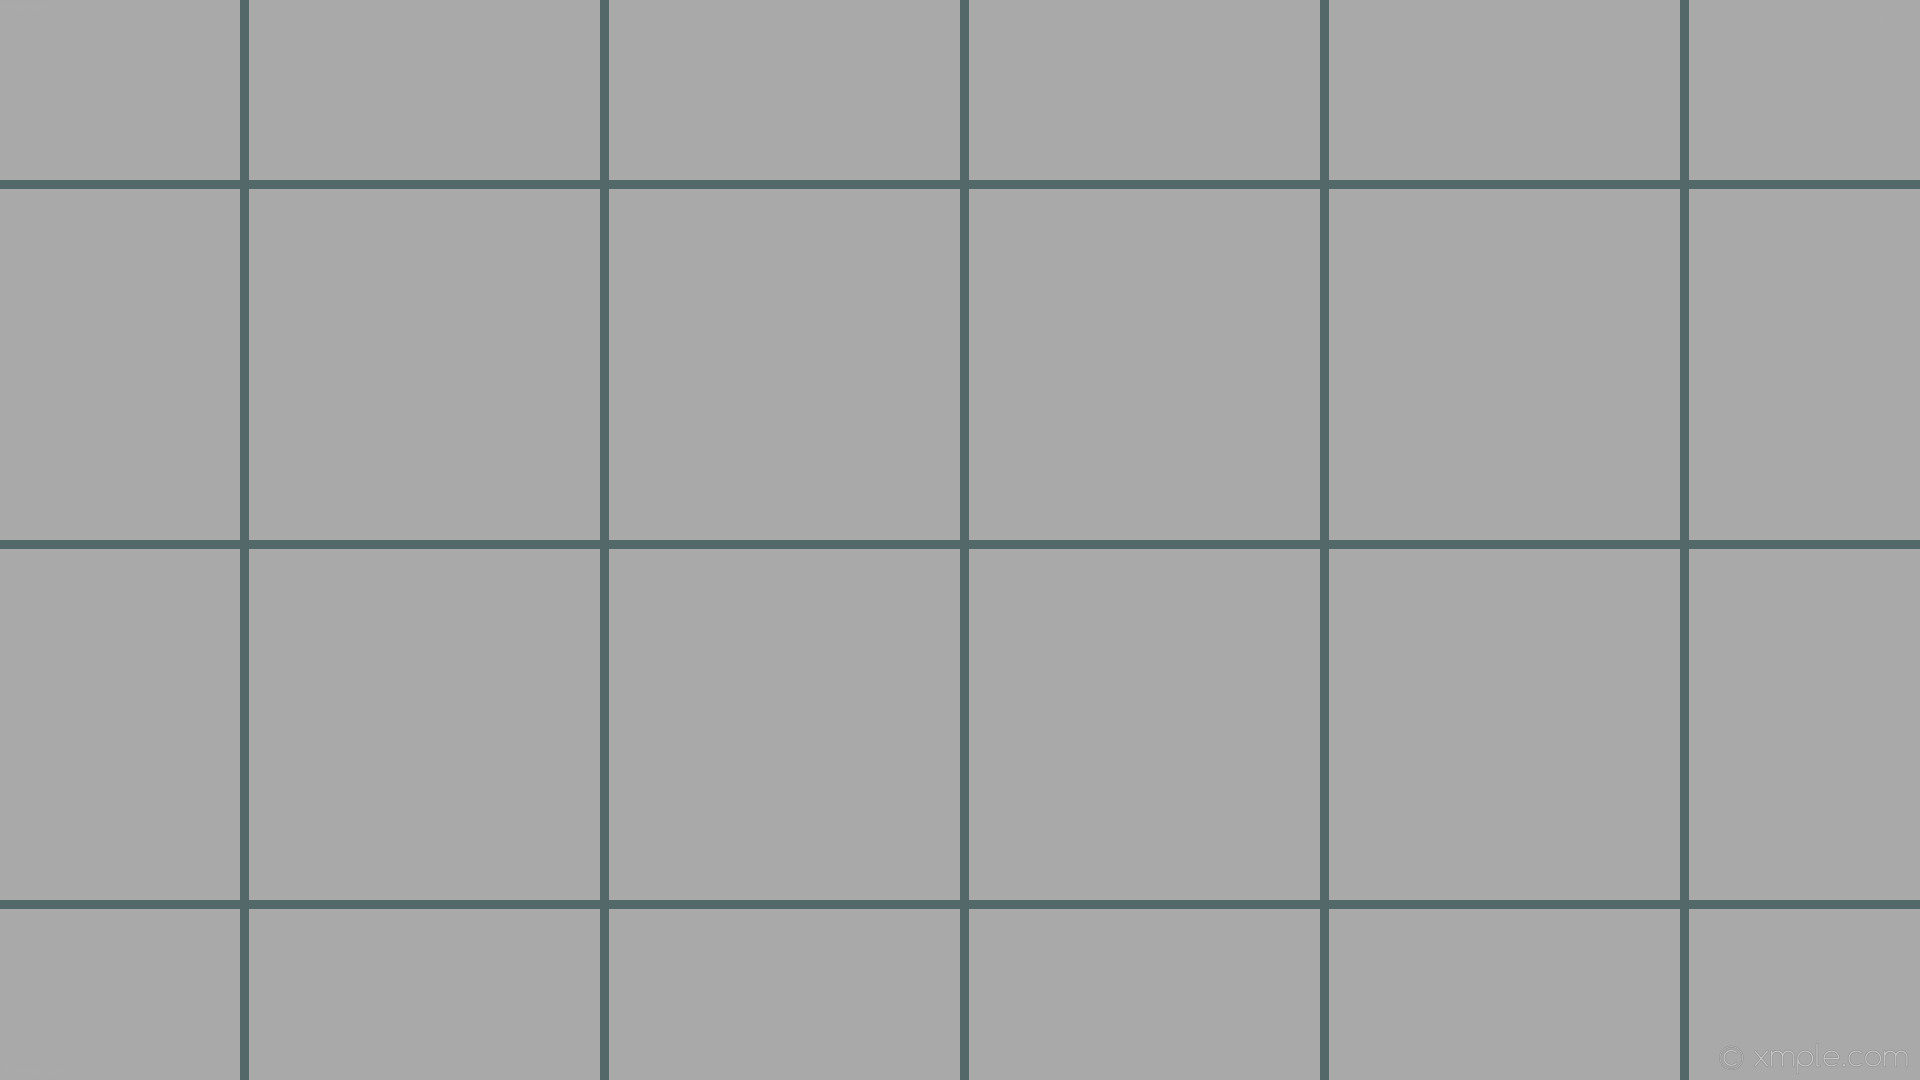 1920x1080 wallpaper grey grid graph paper dark gray dark slate gray #a9a9a9 #2f4f4f 0Â°